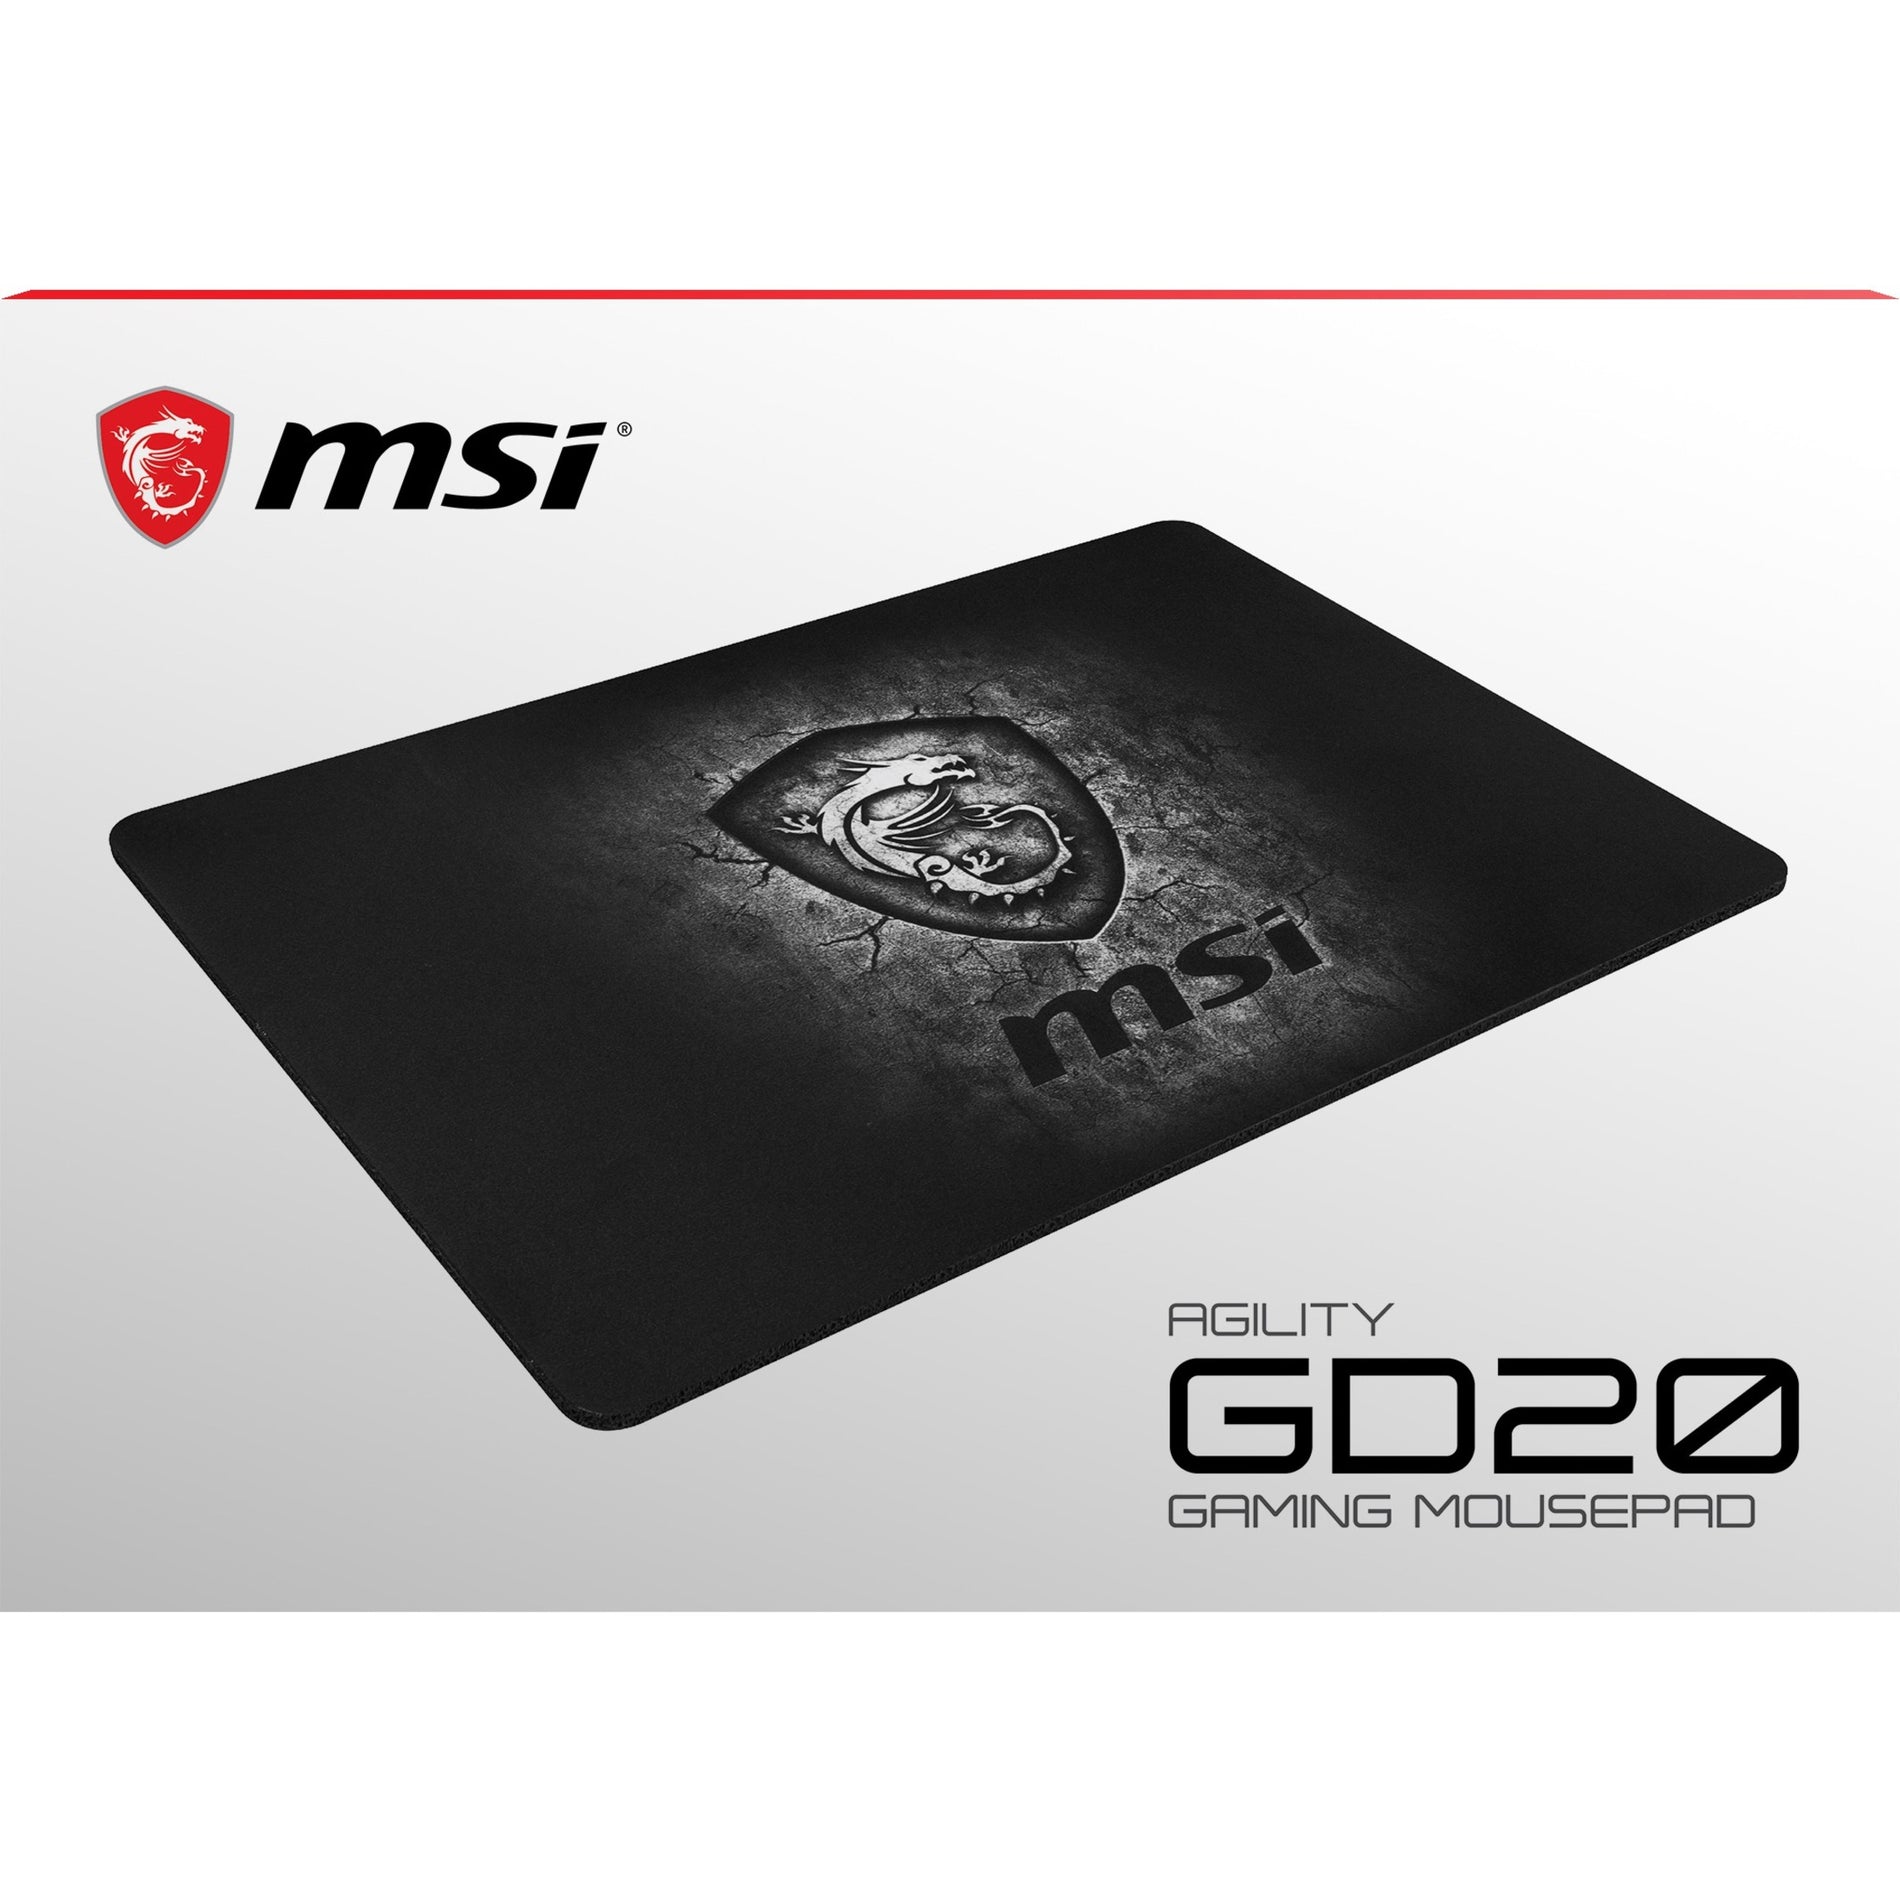 MSI AGILITY GD20 Gaming Mousepad, Smooth, Non-slip Base, Comfortable